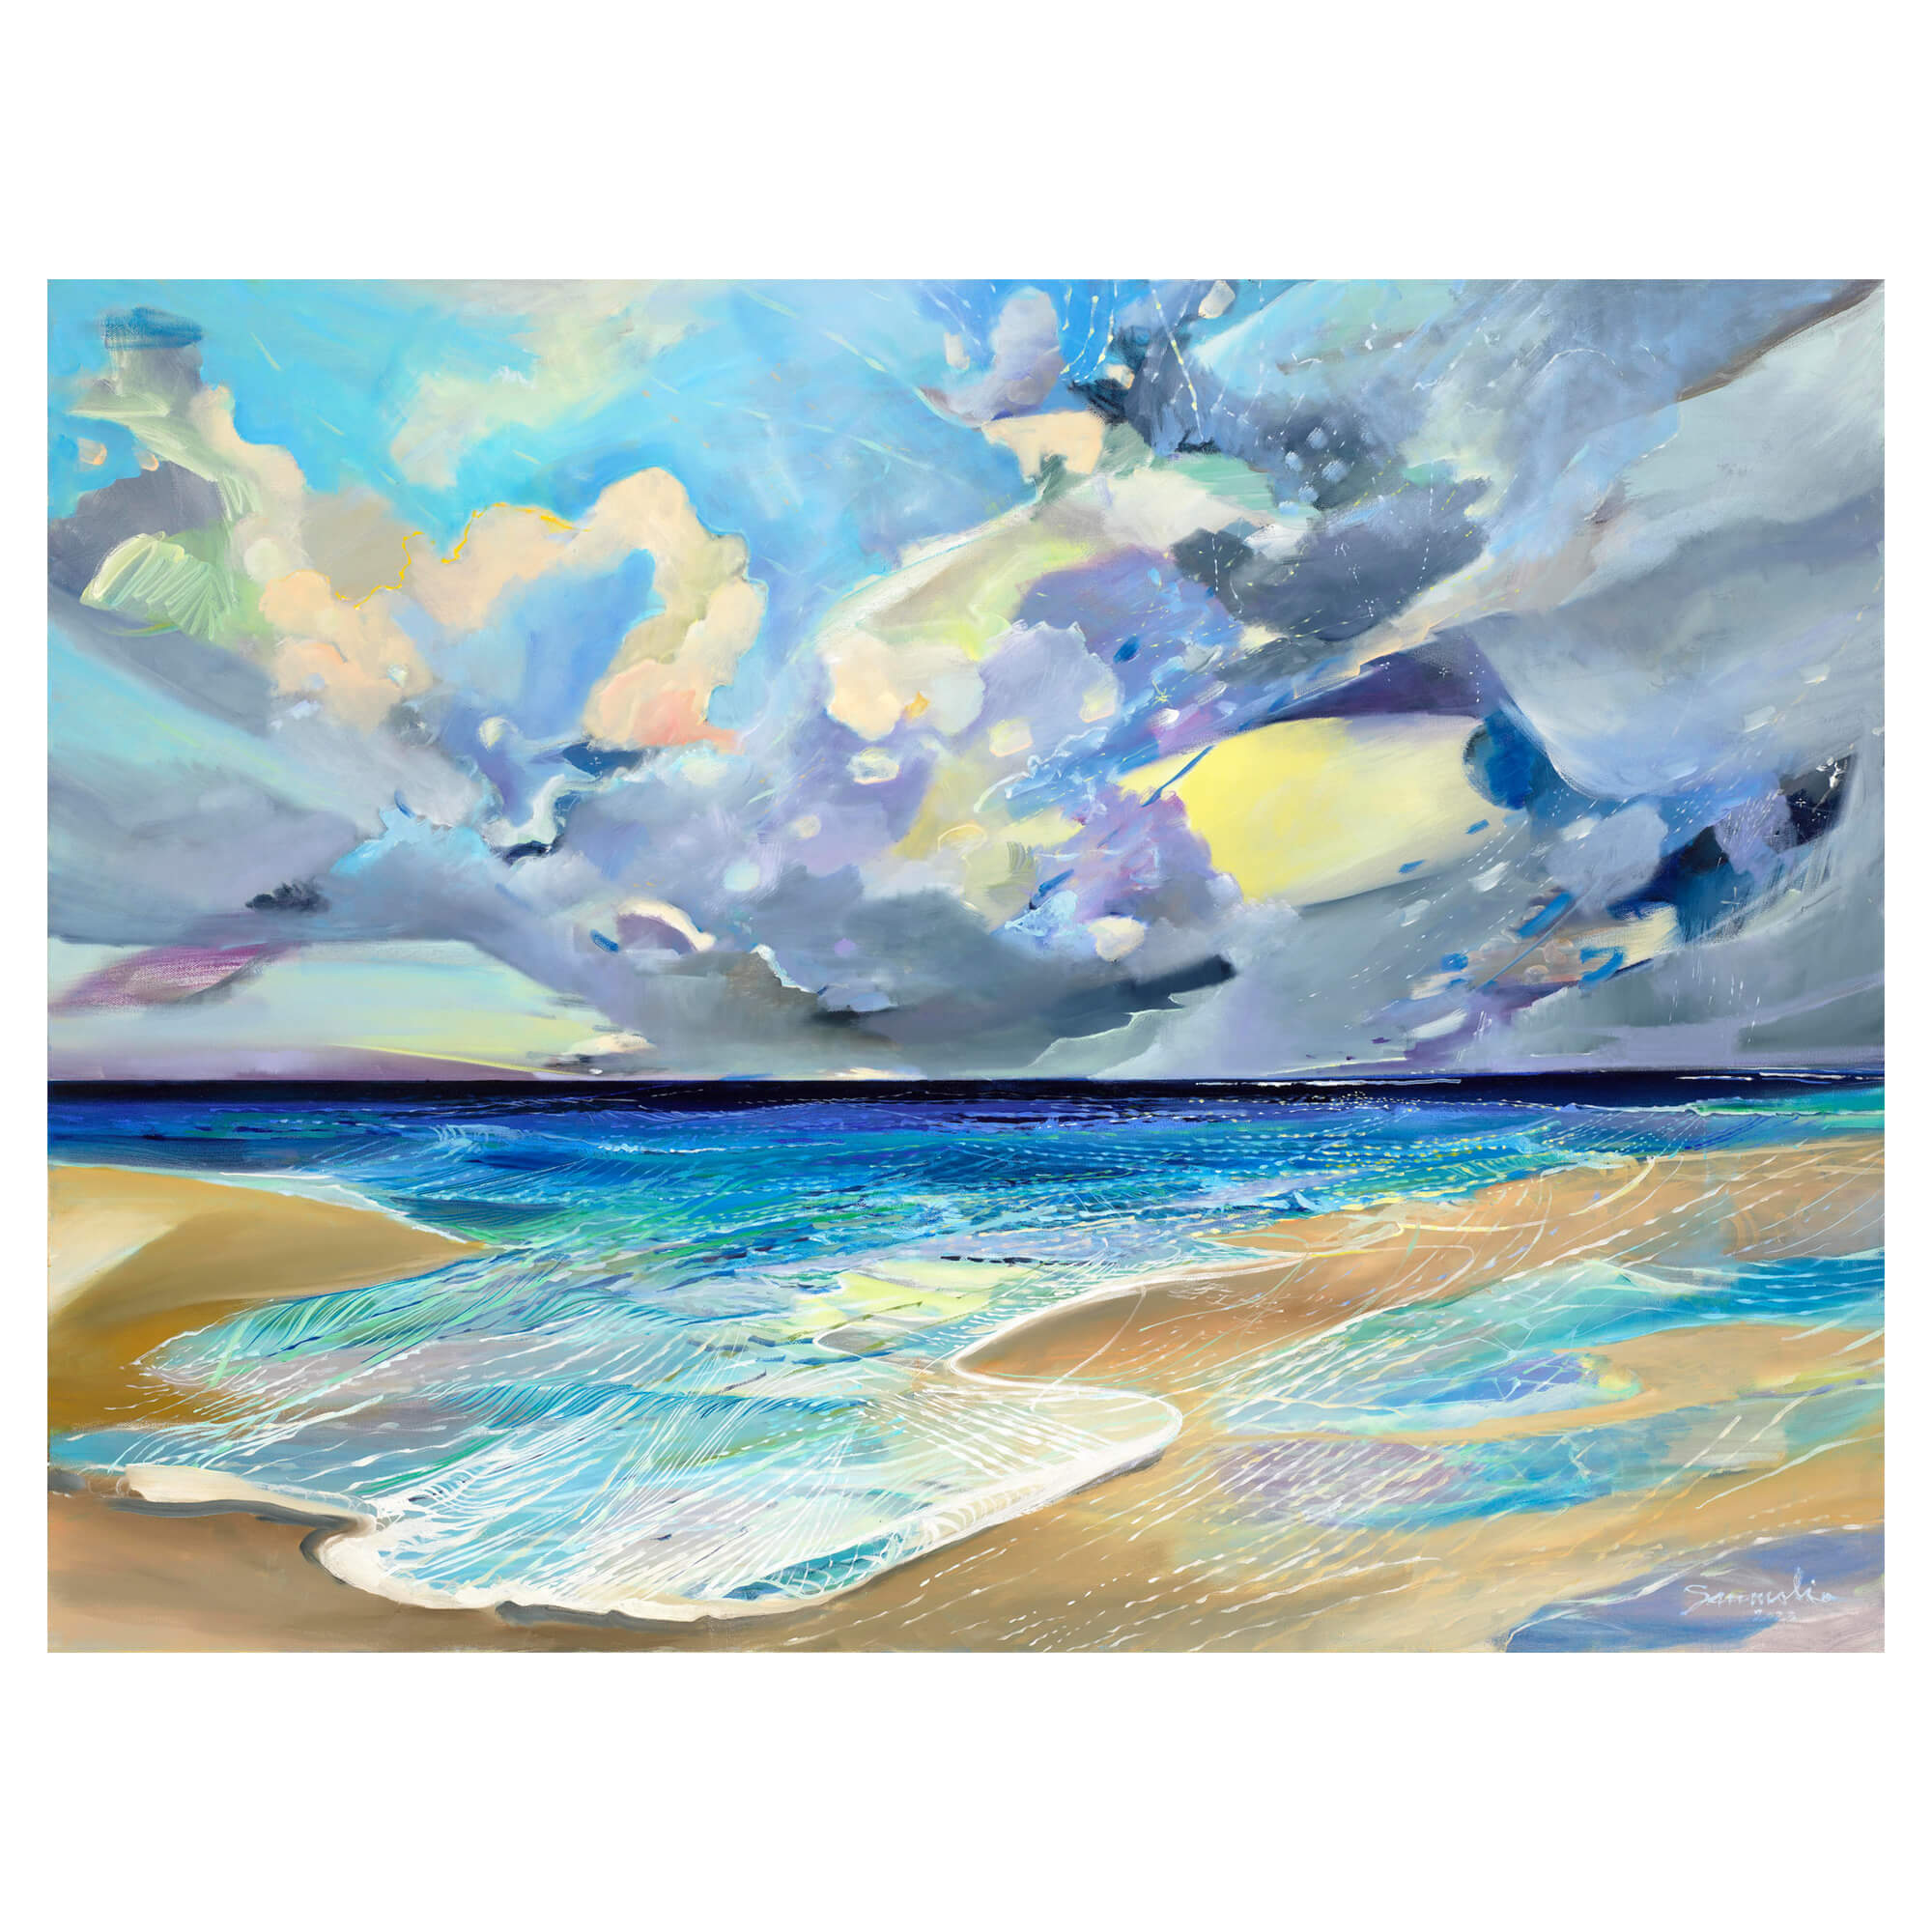 Abstract teal hued ocean horizon by Hawaii artist Saumolia Puapuaga